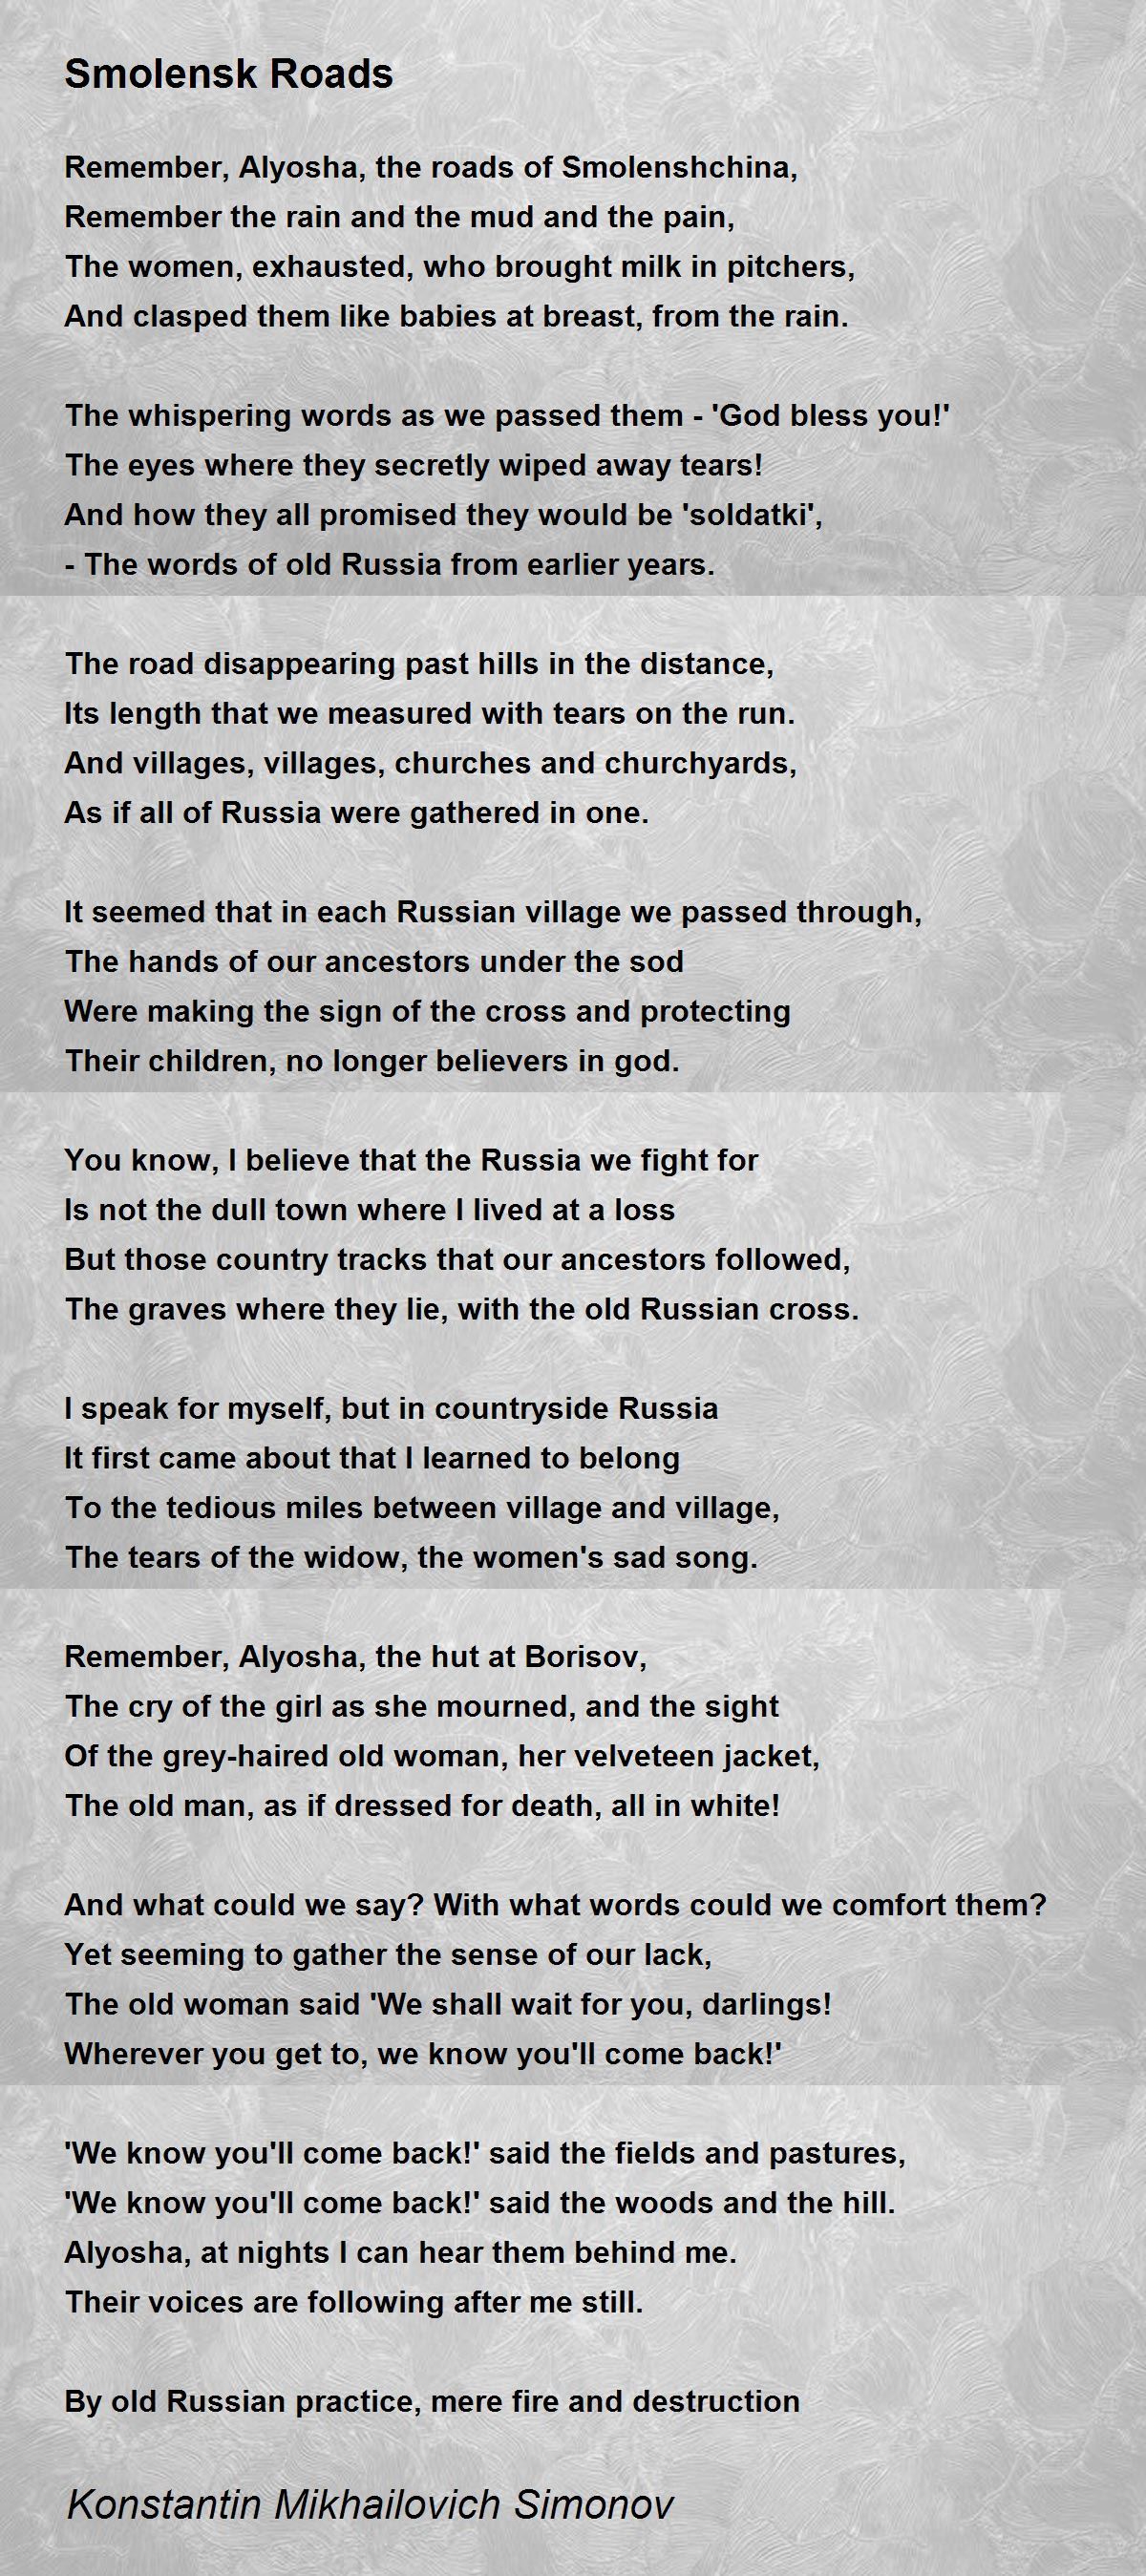 Smolensk Roads - Smolensk Roads Poem by Konstantin Mikhailovich Simonov